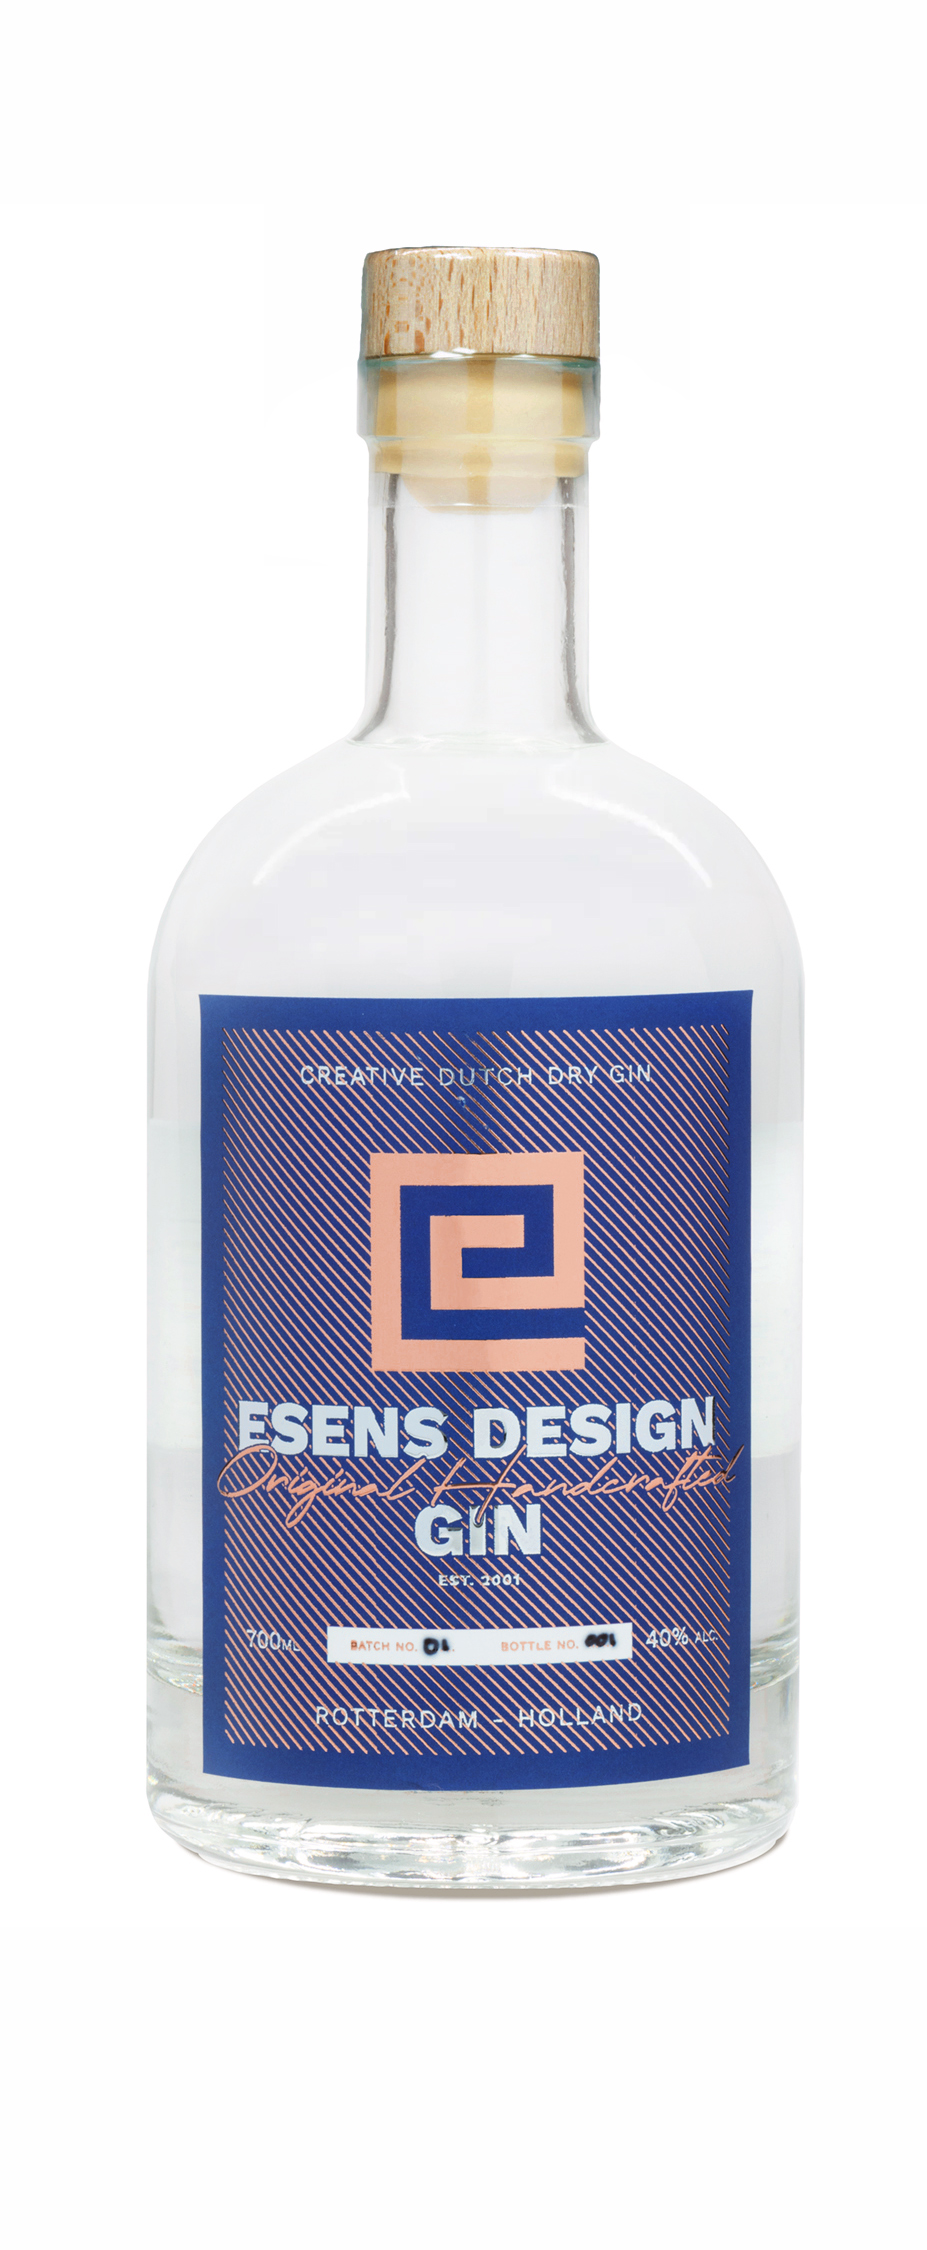 Private label fles gin met custom etiket voor Esens Design